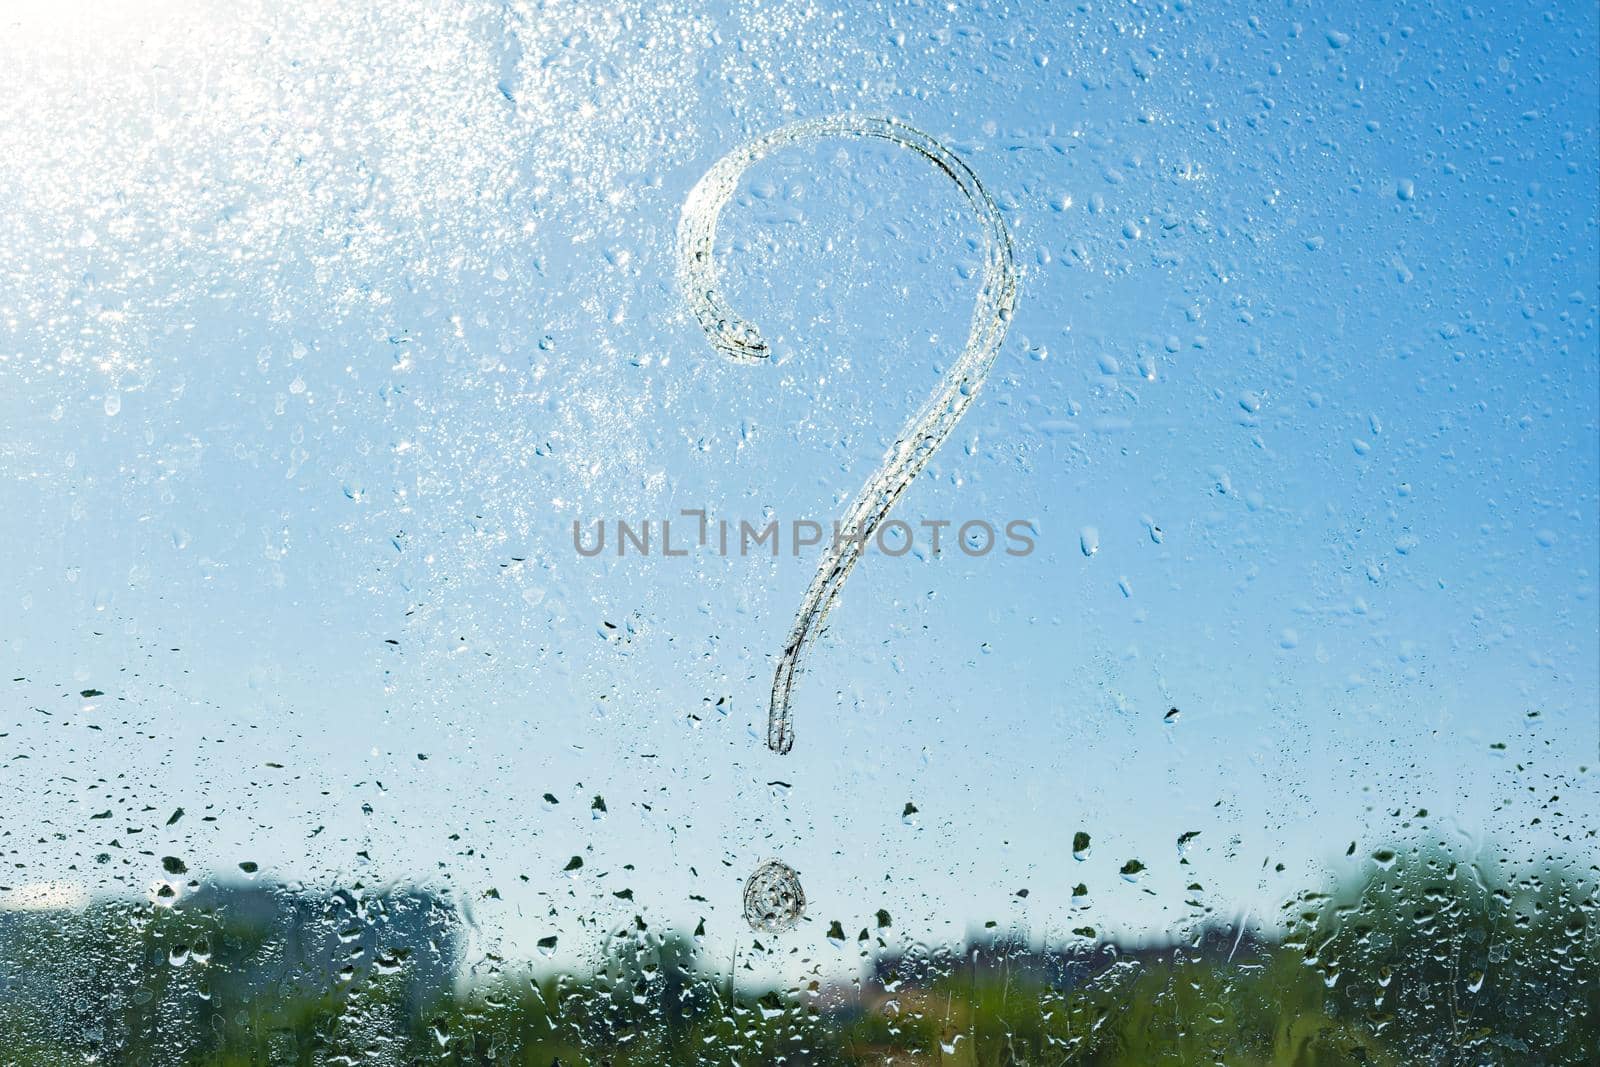 Handwritten question mark on rainy window. Background drop of water on the glass, blue sky, sun.